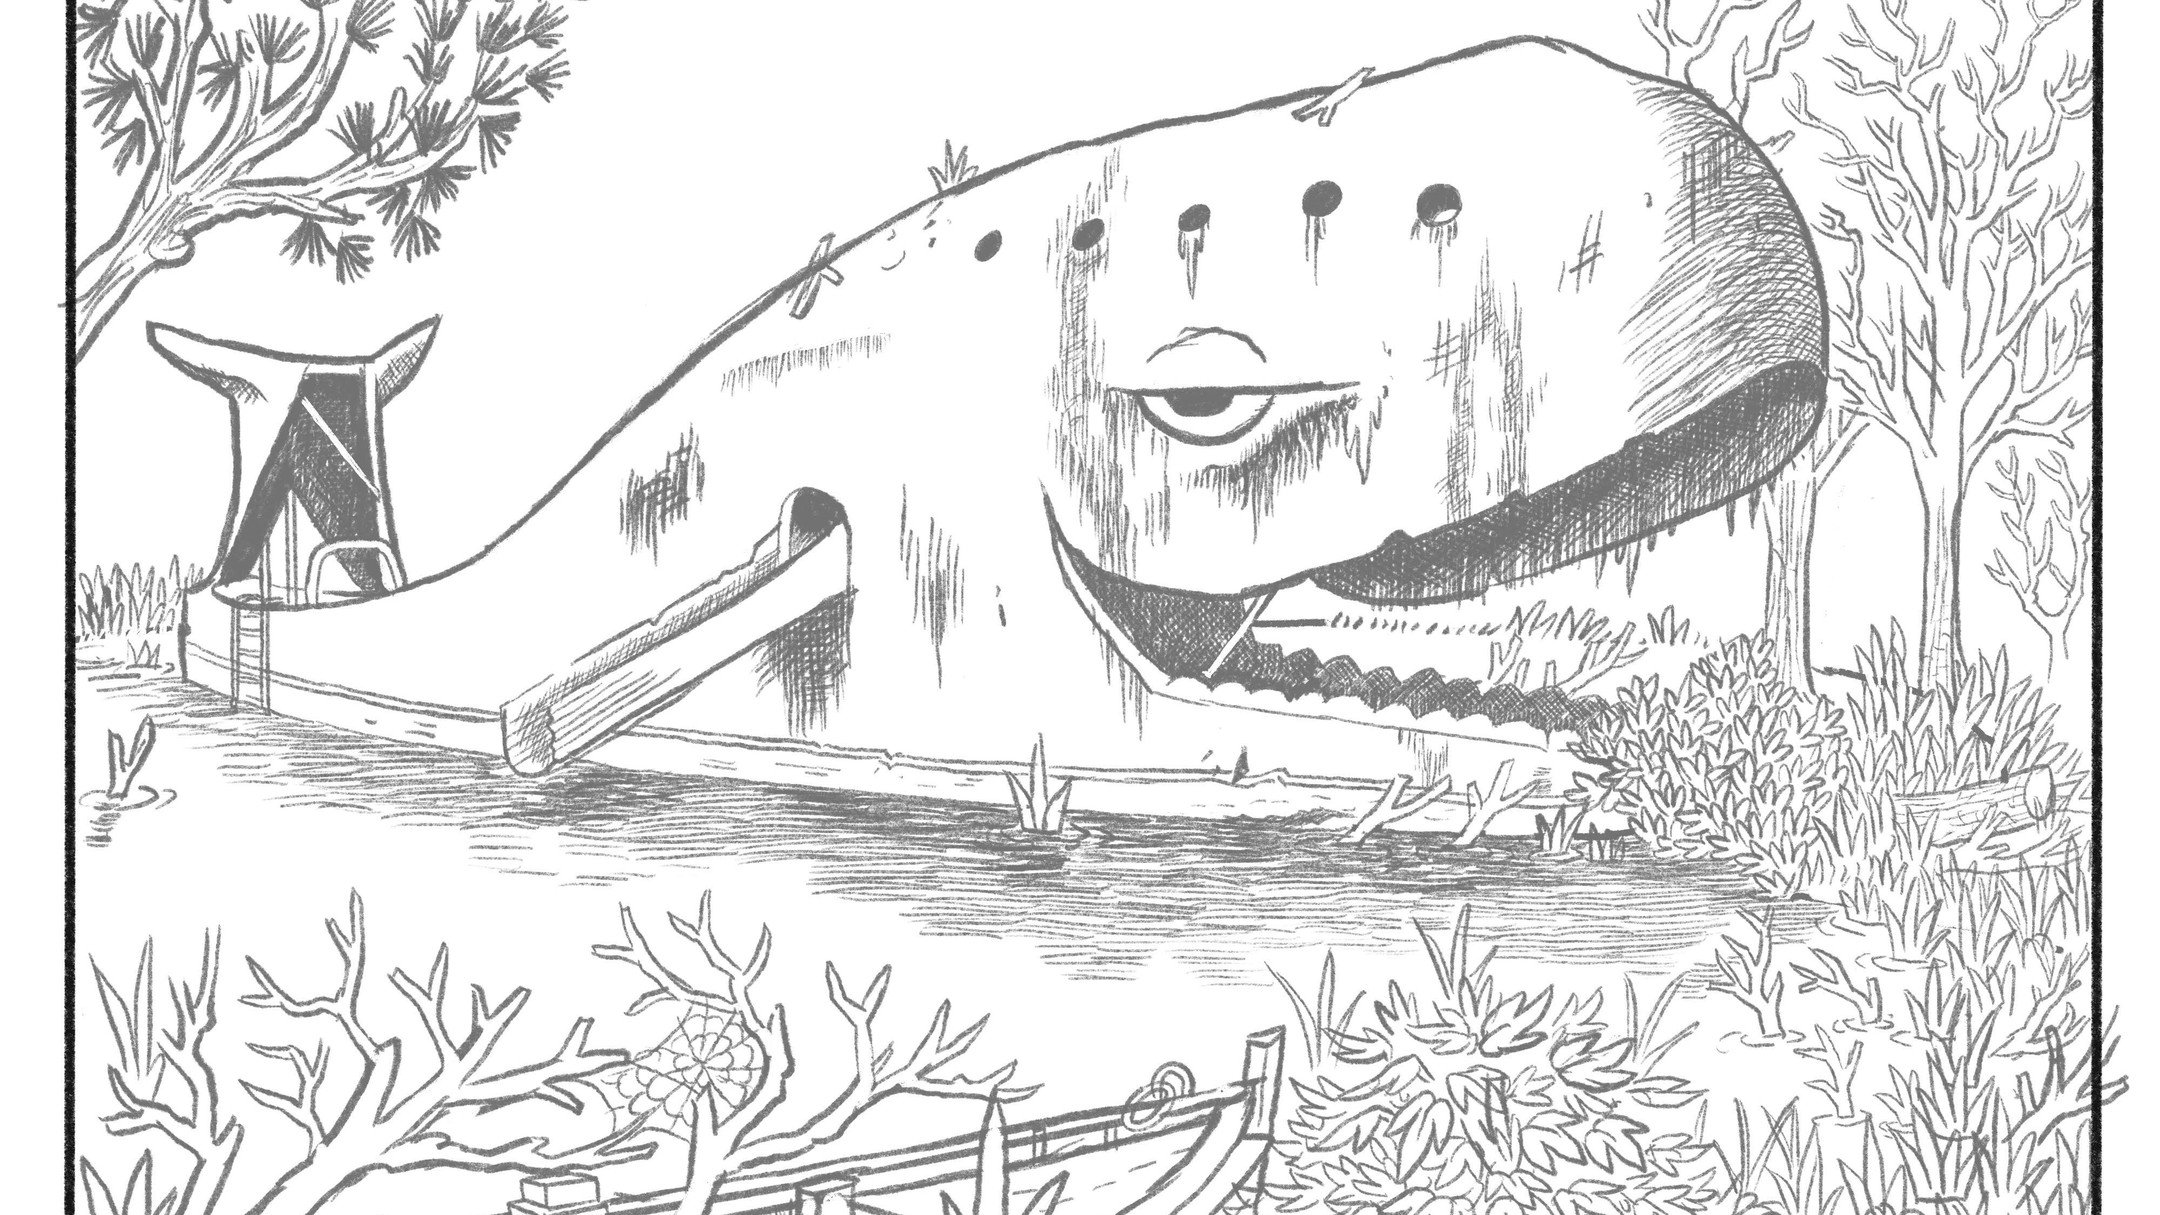 The Blue Whale of Catoosa #drawing #illustration #bluewhaleofcatoosa #submechaniphobia #rottinghorror